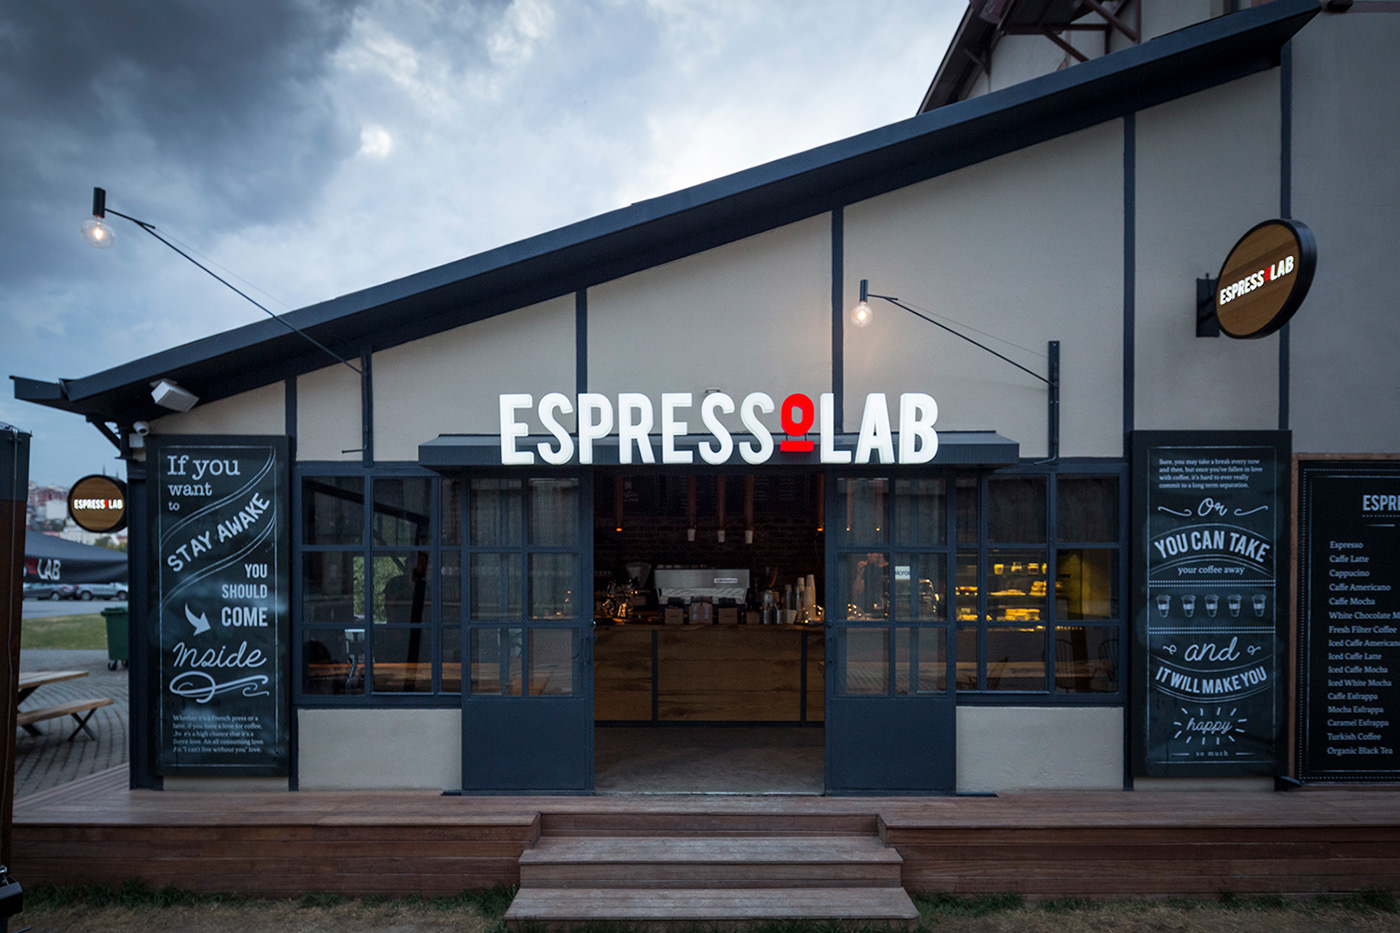 coffeeshop Coffee cafe espressolab istanbul place shop espresso latte americano lettering wood